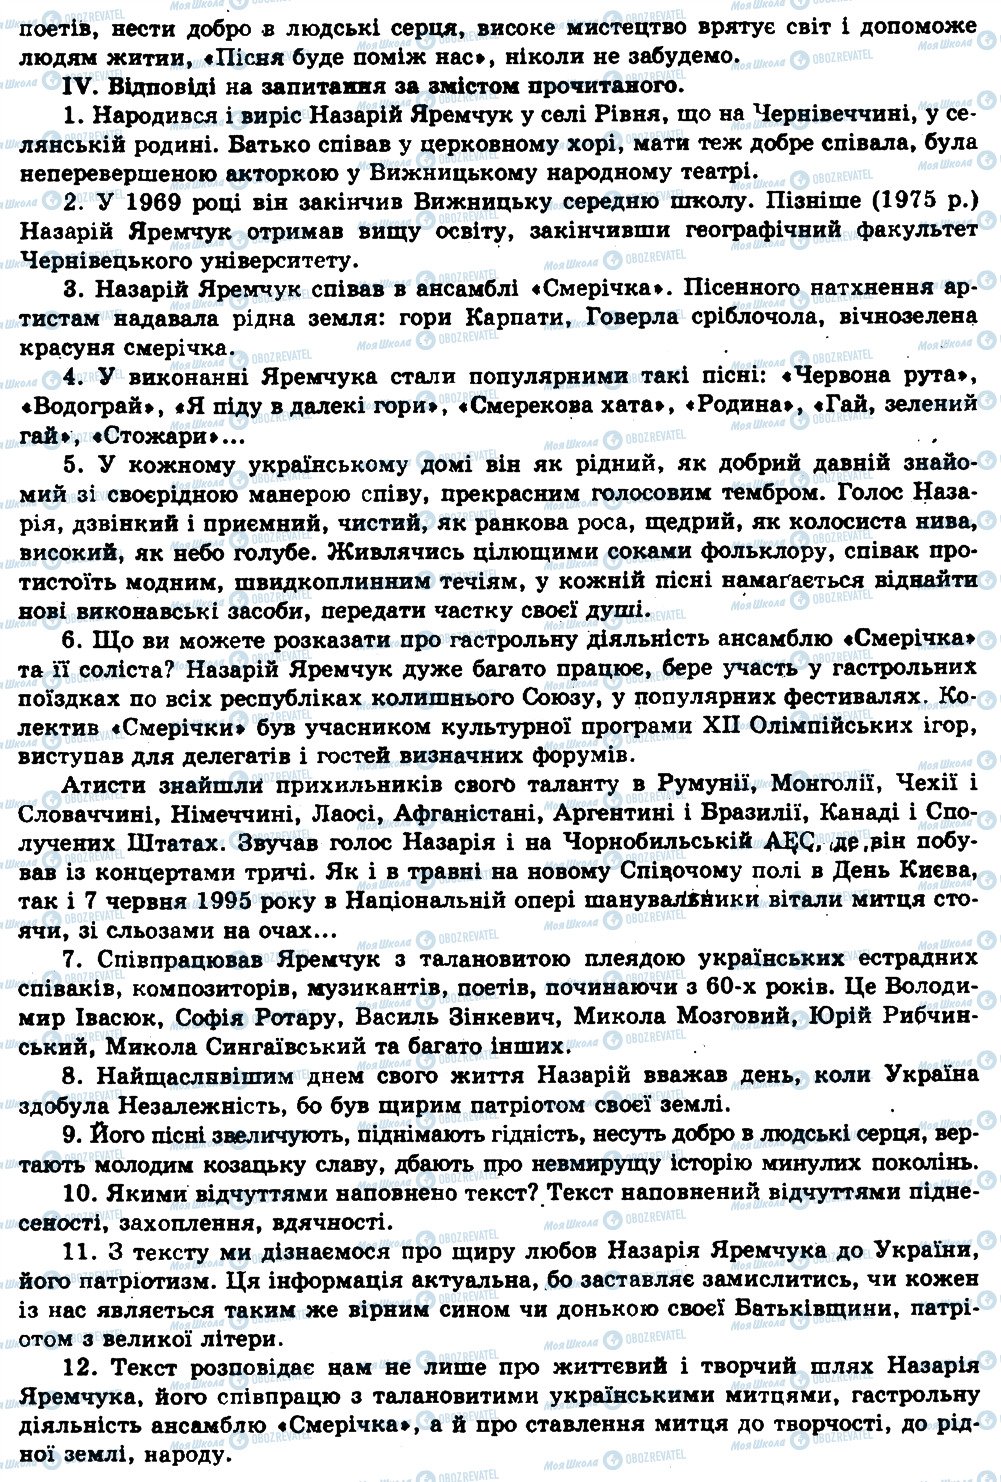 ГДЗ Укр мова 11 класс страница 485